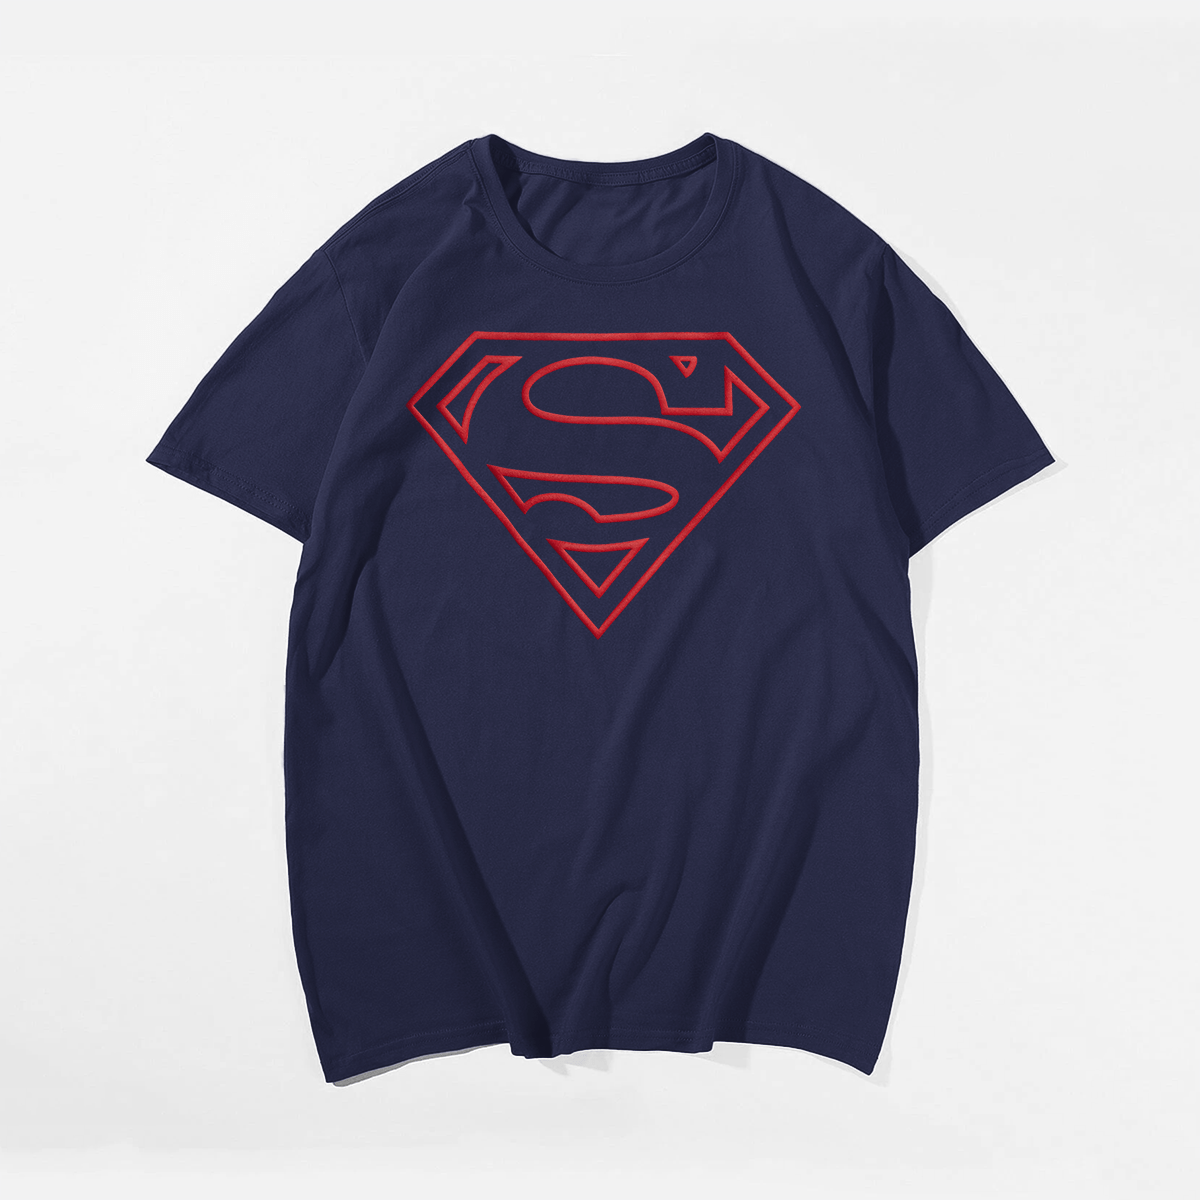 Superman T-shirt for Men, Oversize Plus Size Big & Tall Man Clothing